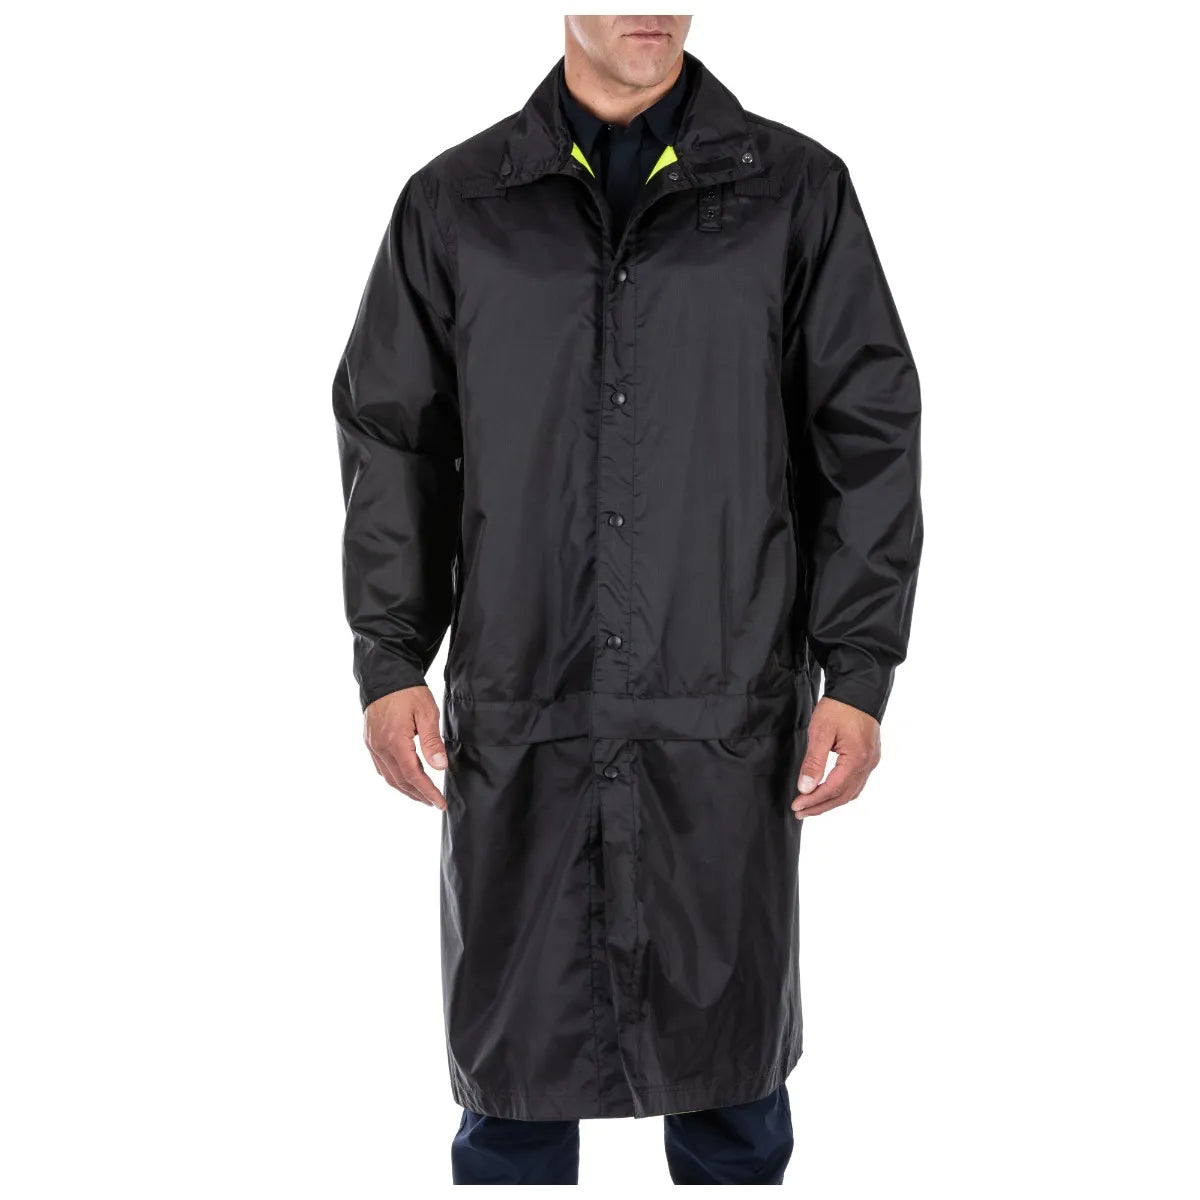 5.11 Tactical Long Reversible Hi-Vis Rain Coat